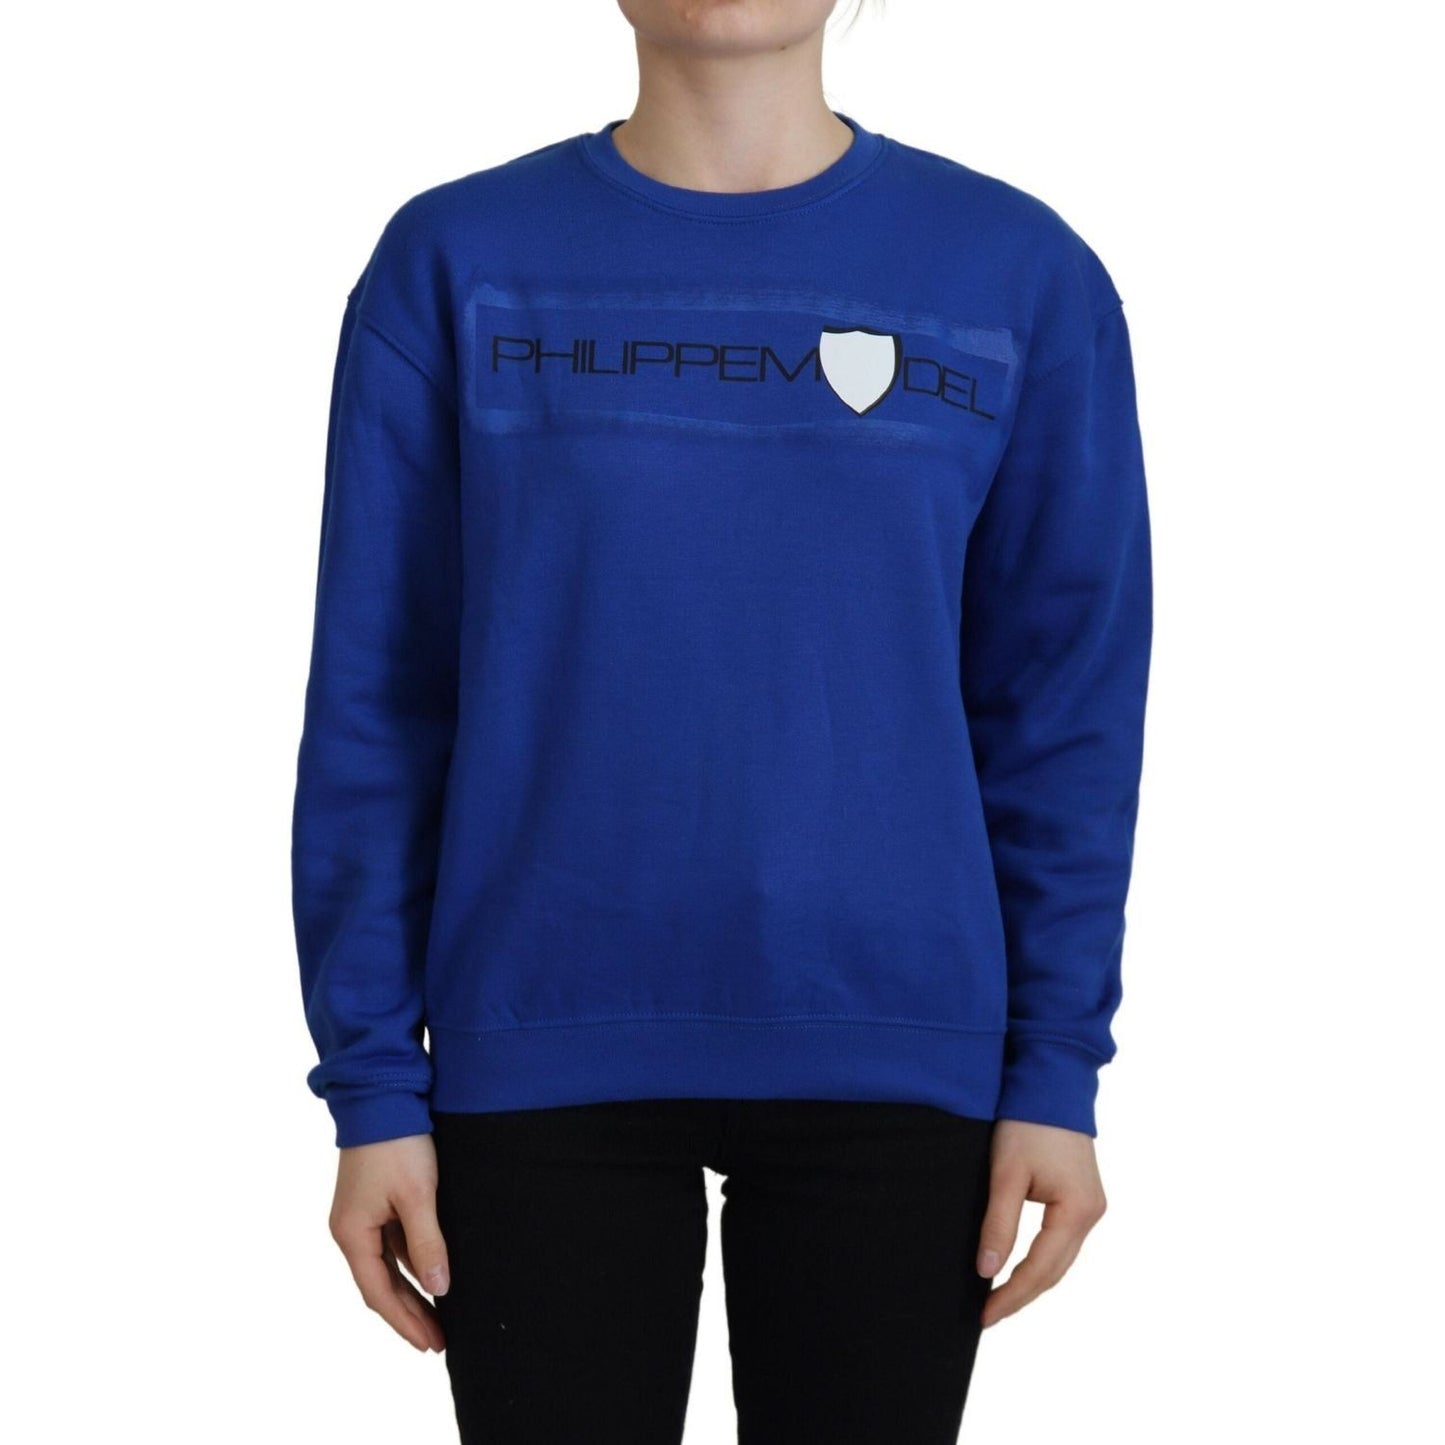 Philippe Model Chic Blue Printed Long Sleeve Pullover Sweater blue-printed-long-sleeves-pullover-sweater IMG_9329-1-scaled-d627349e-7b6.jpg